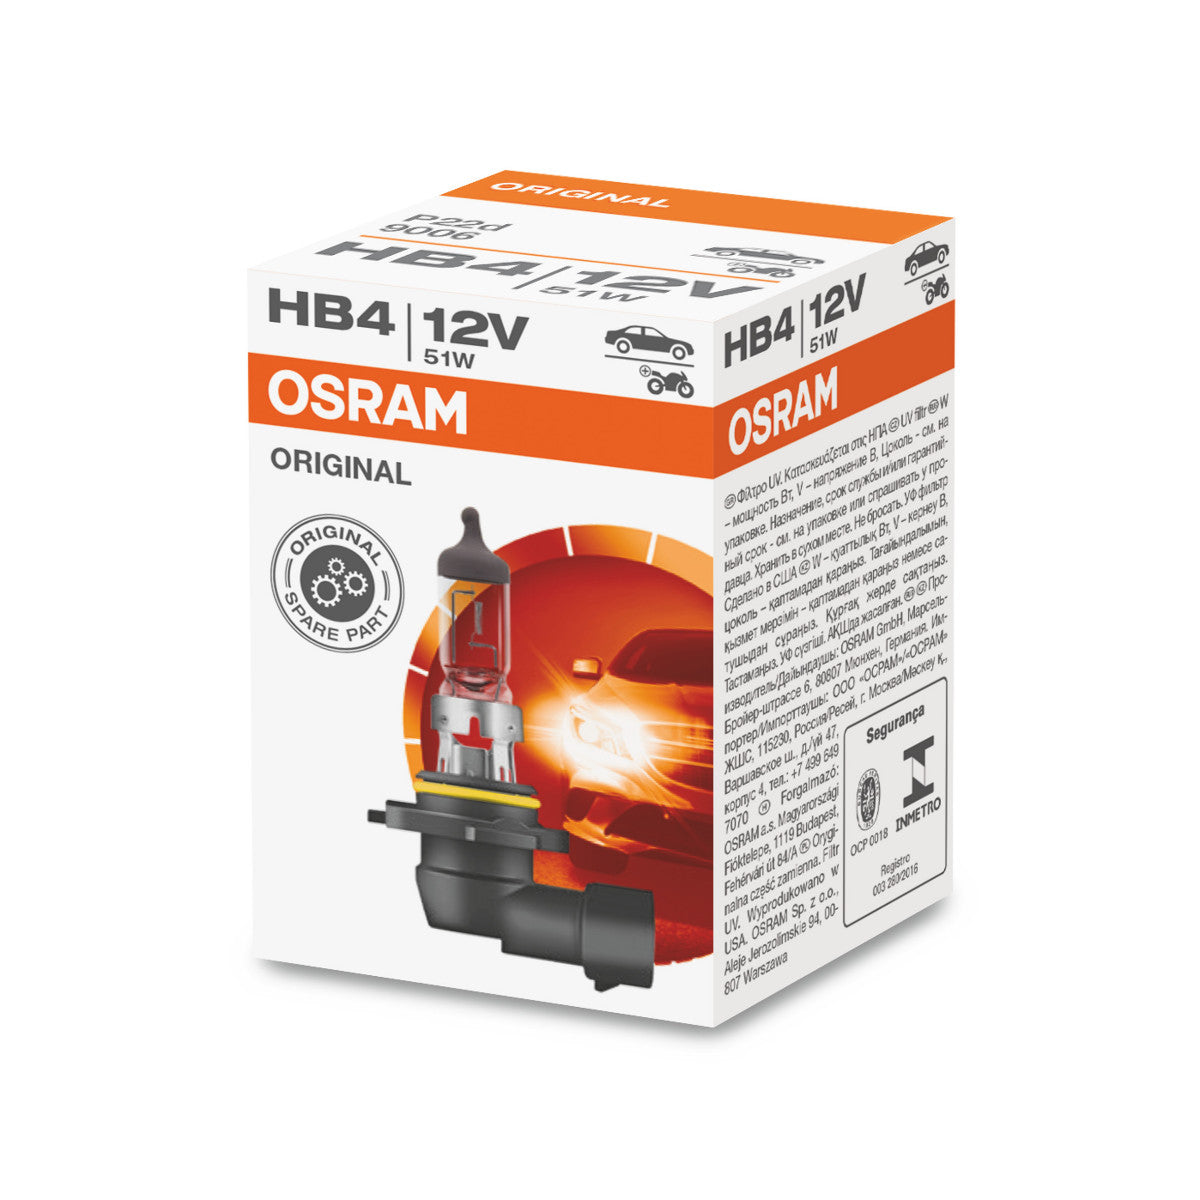 OSRAM ORIGINAL LINE - HB4 - 12 V - 51 W - Halogen forlygtepære - Foldeboks